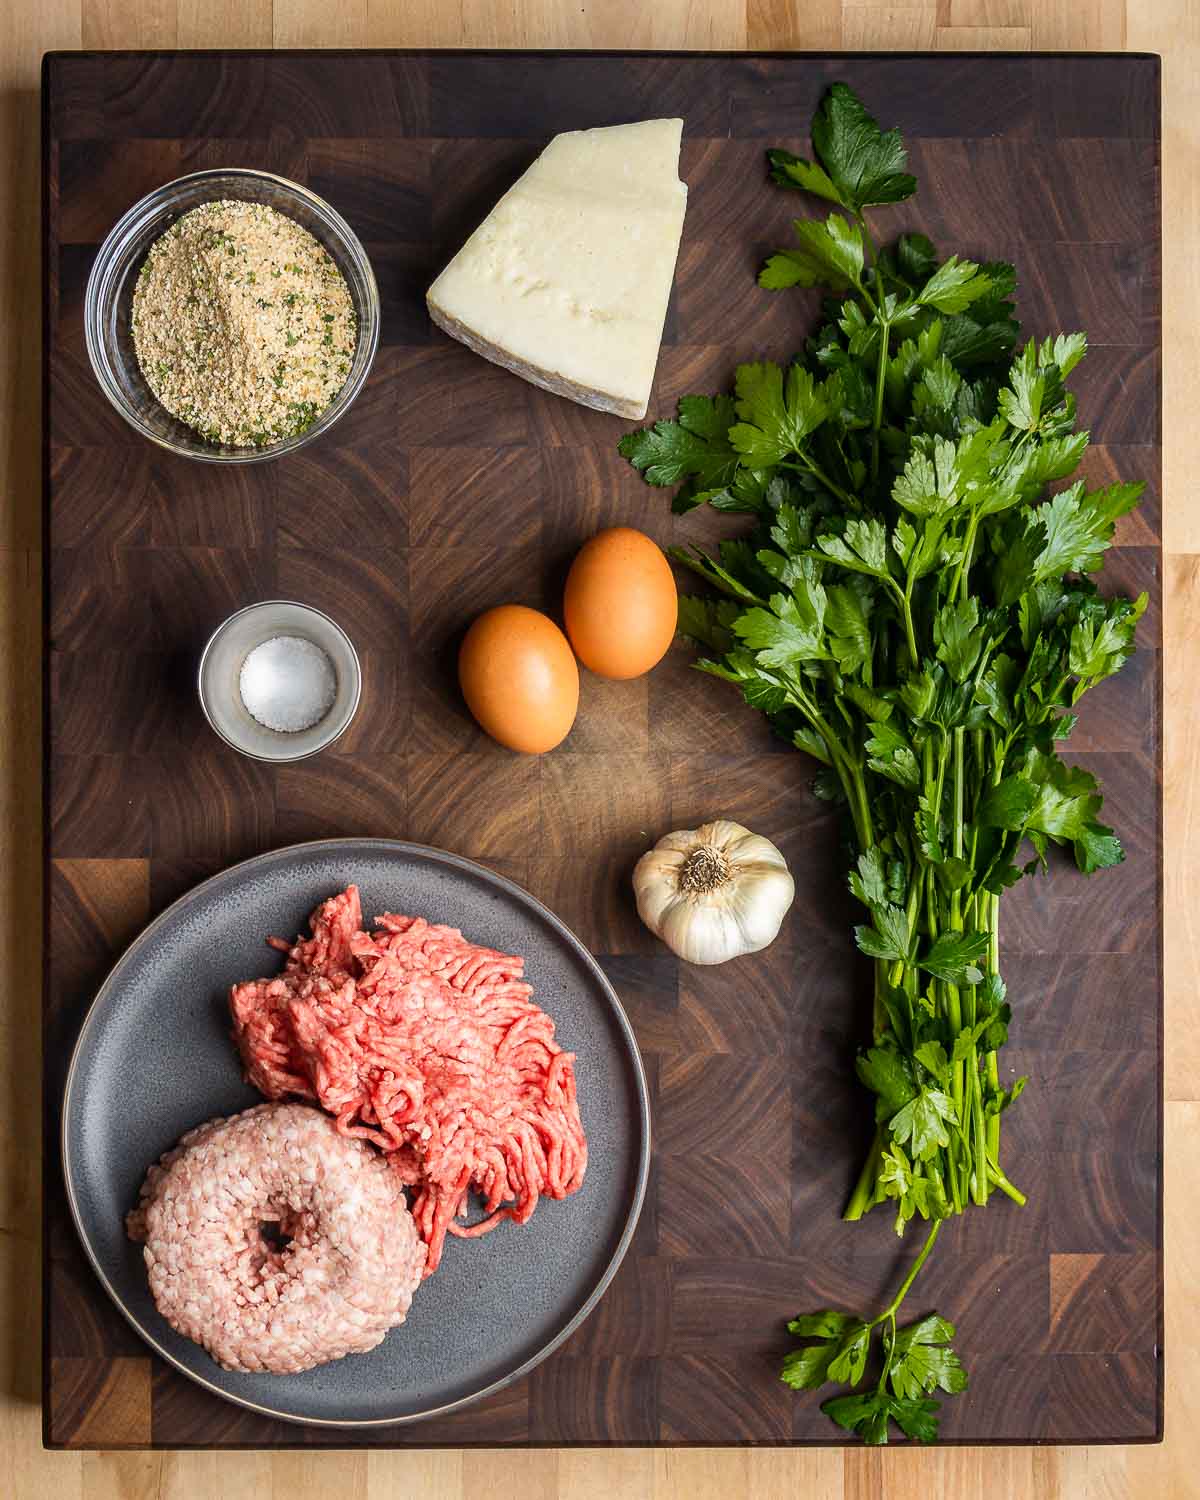 Tiny meatball ingredients shown: breadcrumbs, Pecorino, parsley, salt, eggs, garlic, ground chuck, and ground pork.